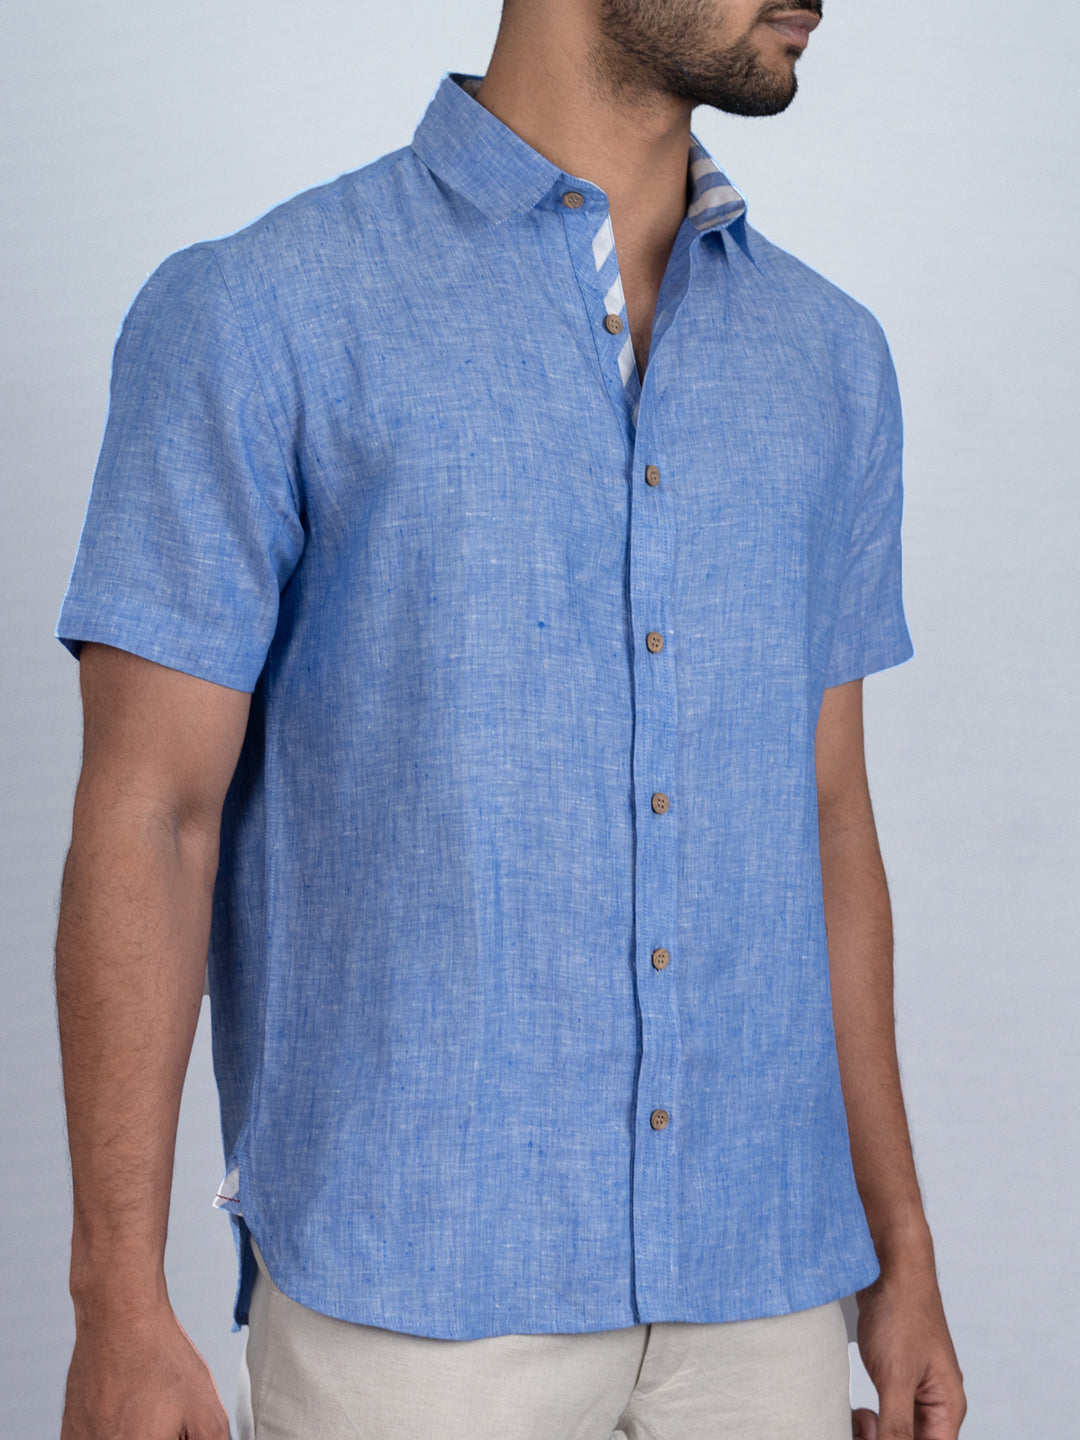 Dante - Men's Pure Linen Chambray Half Sleeve Shirt - Blue